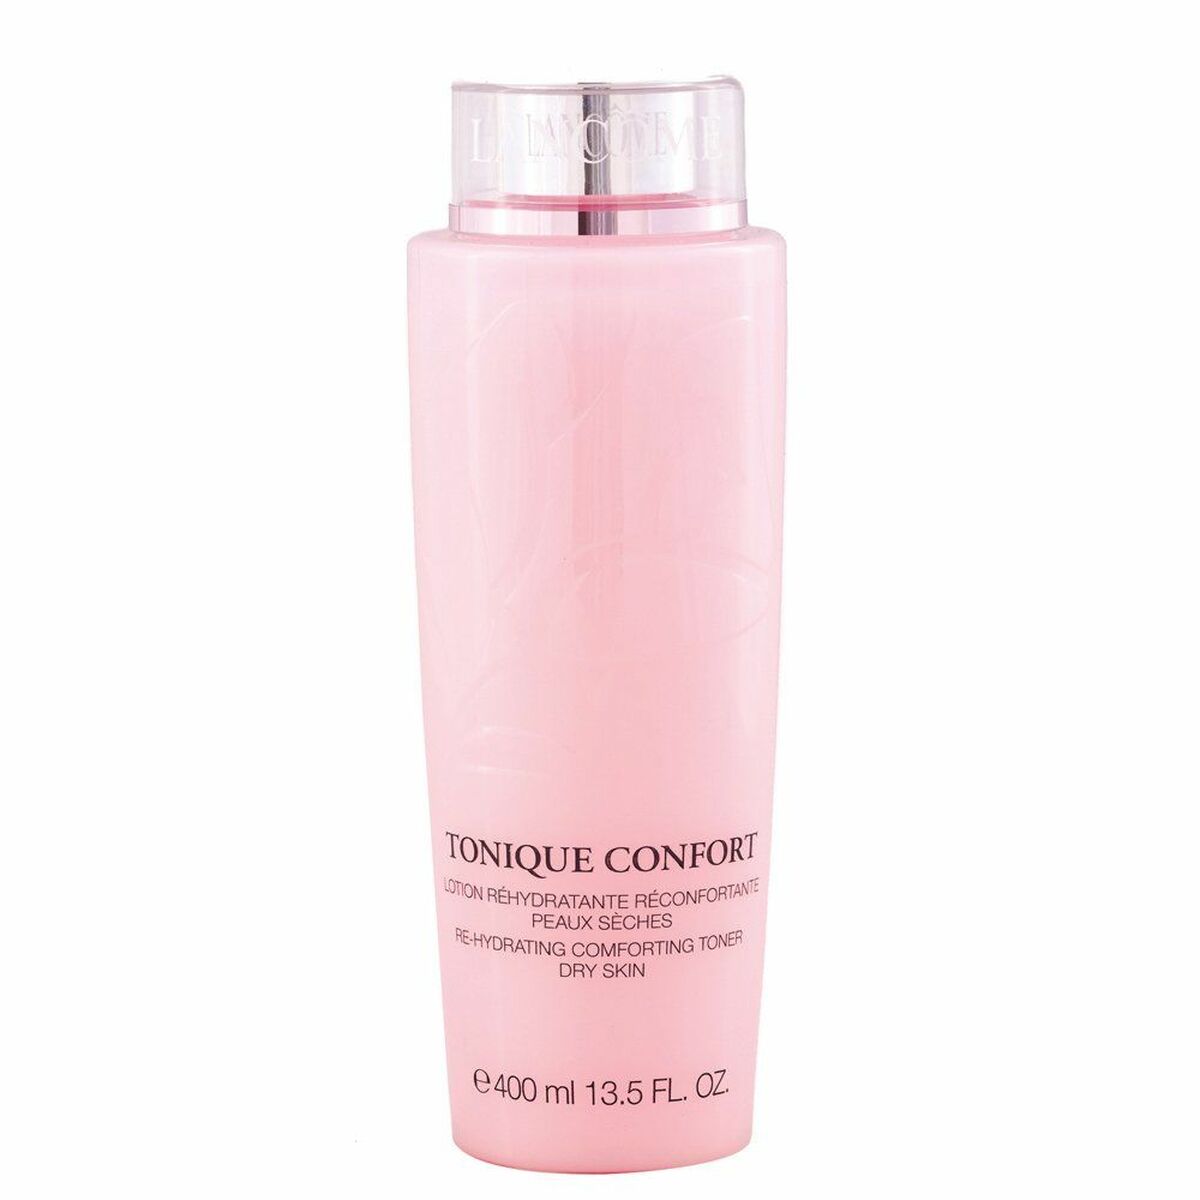 Tonic Facial Confort Lancôme (400 ml)